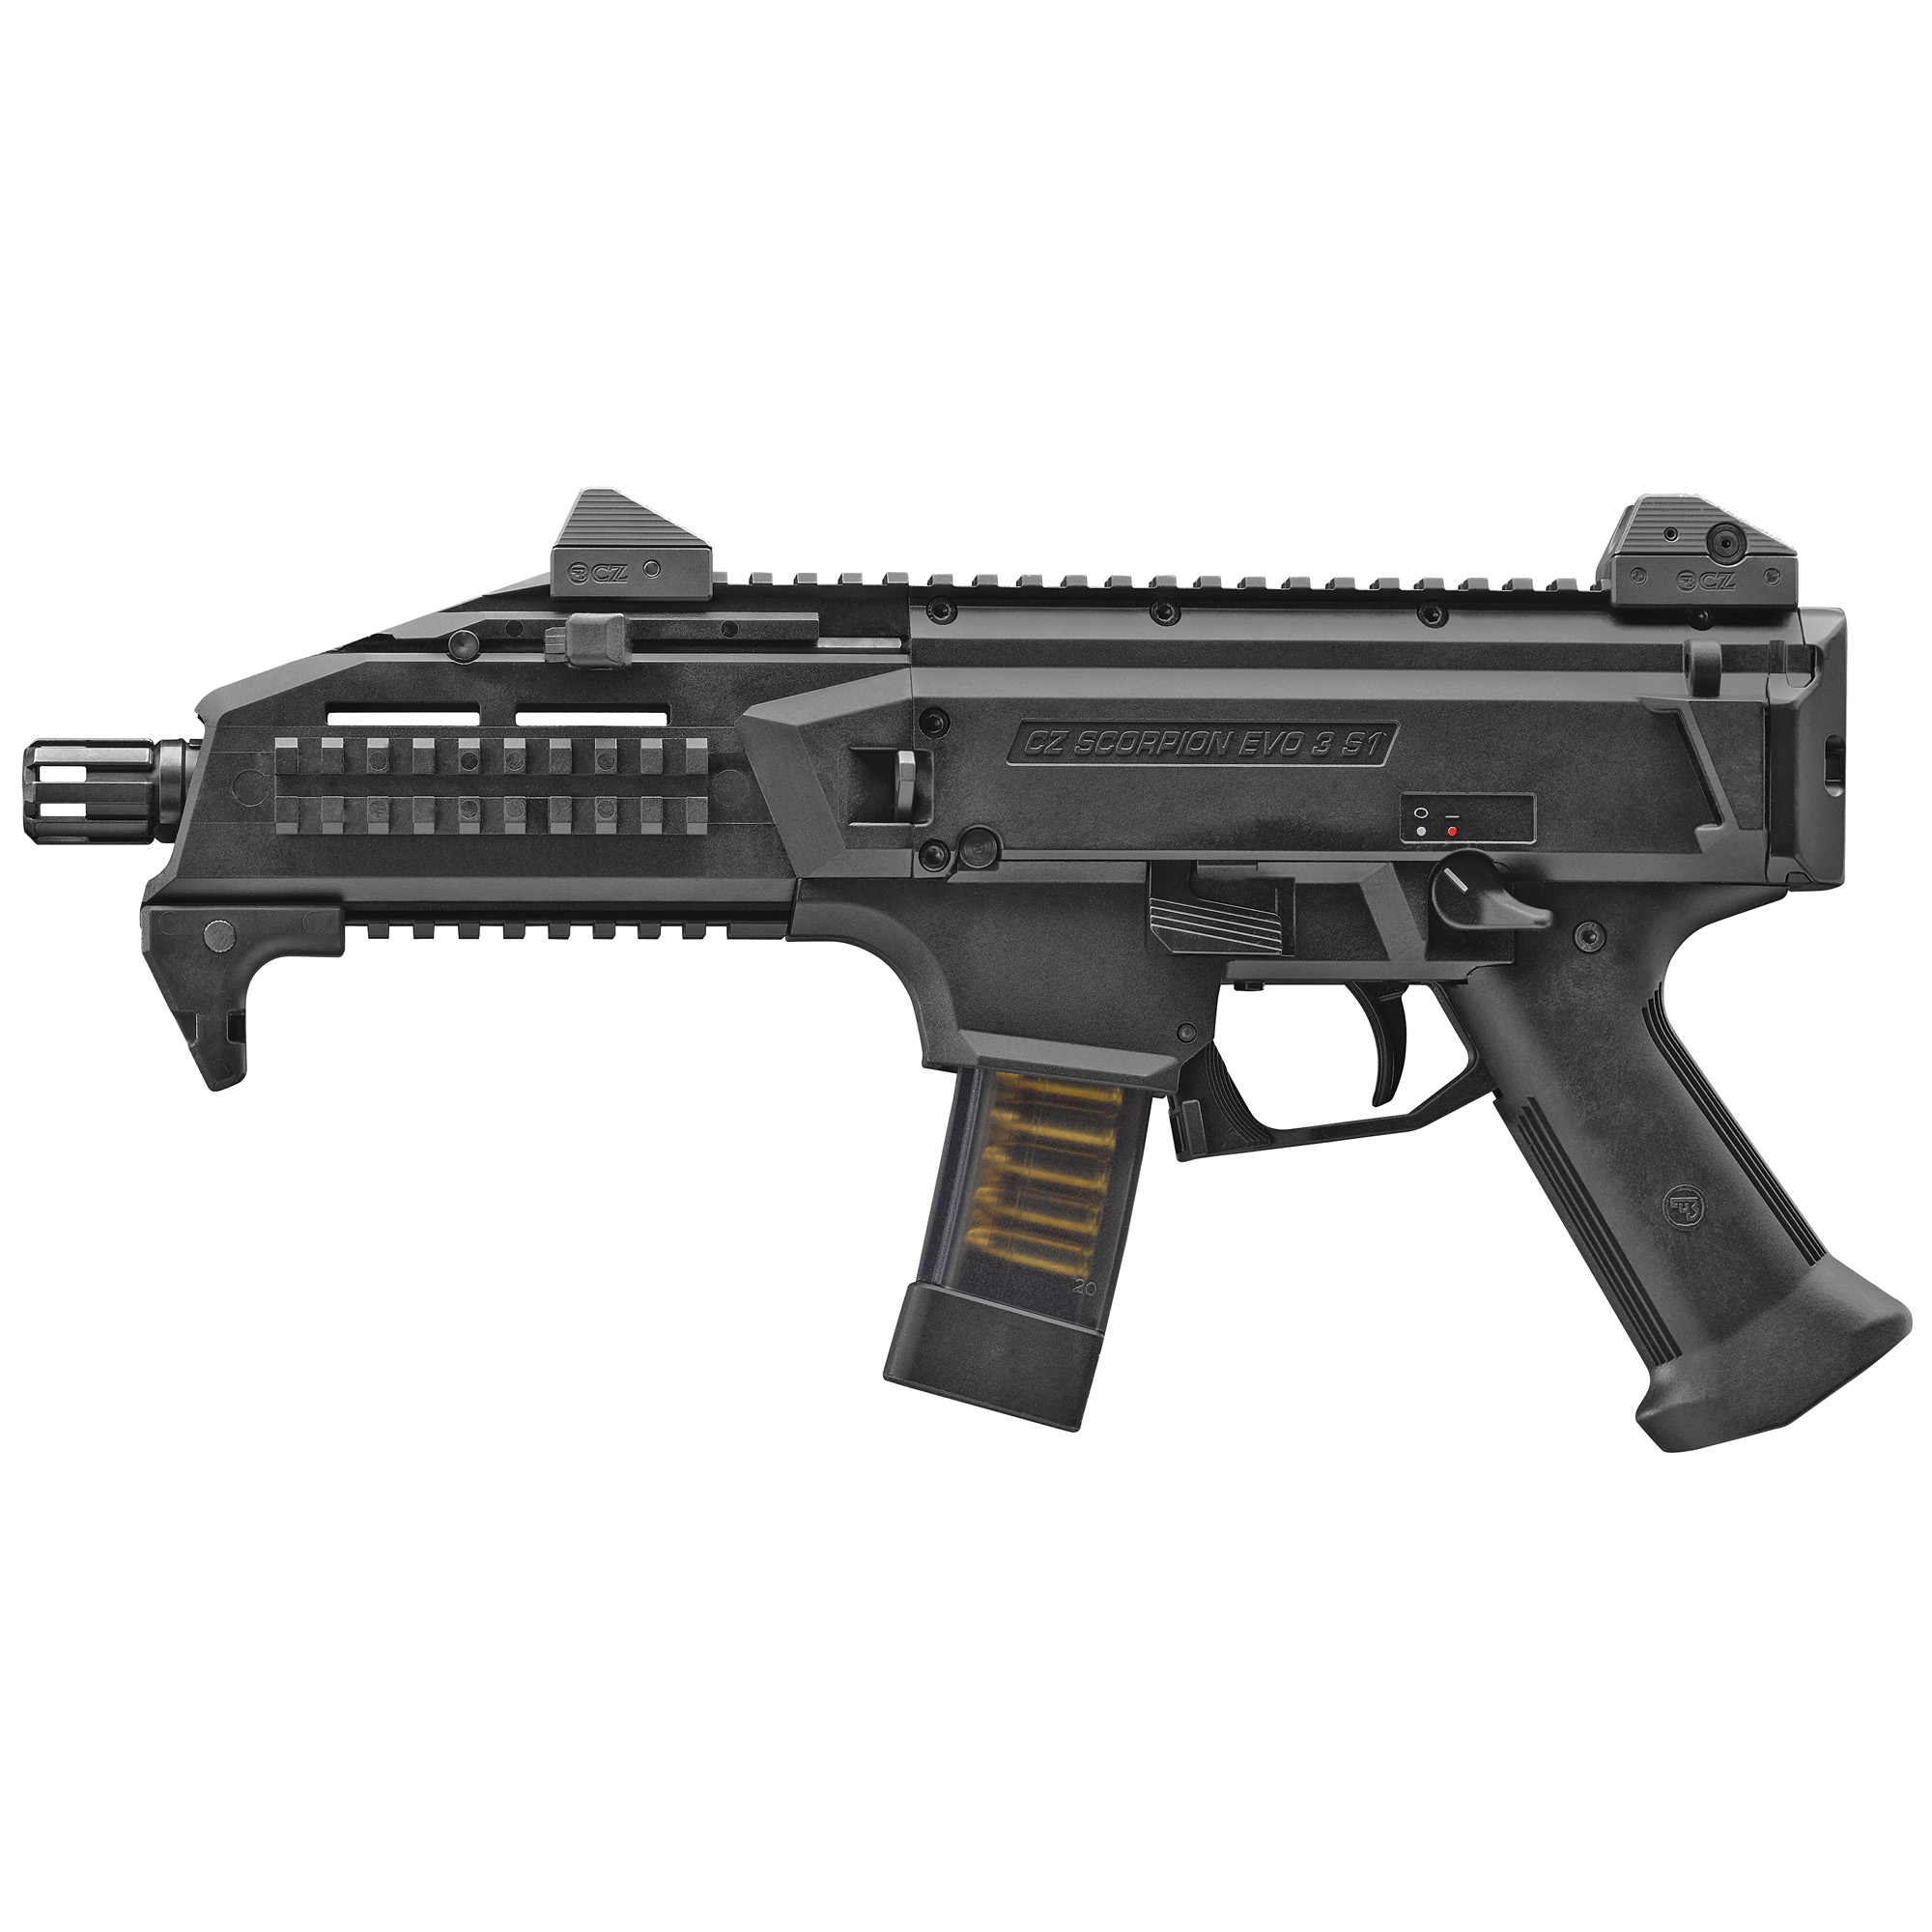 CZ-USA Scorpion EVO 3 S1, 9mm Pistol, Black (91351)